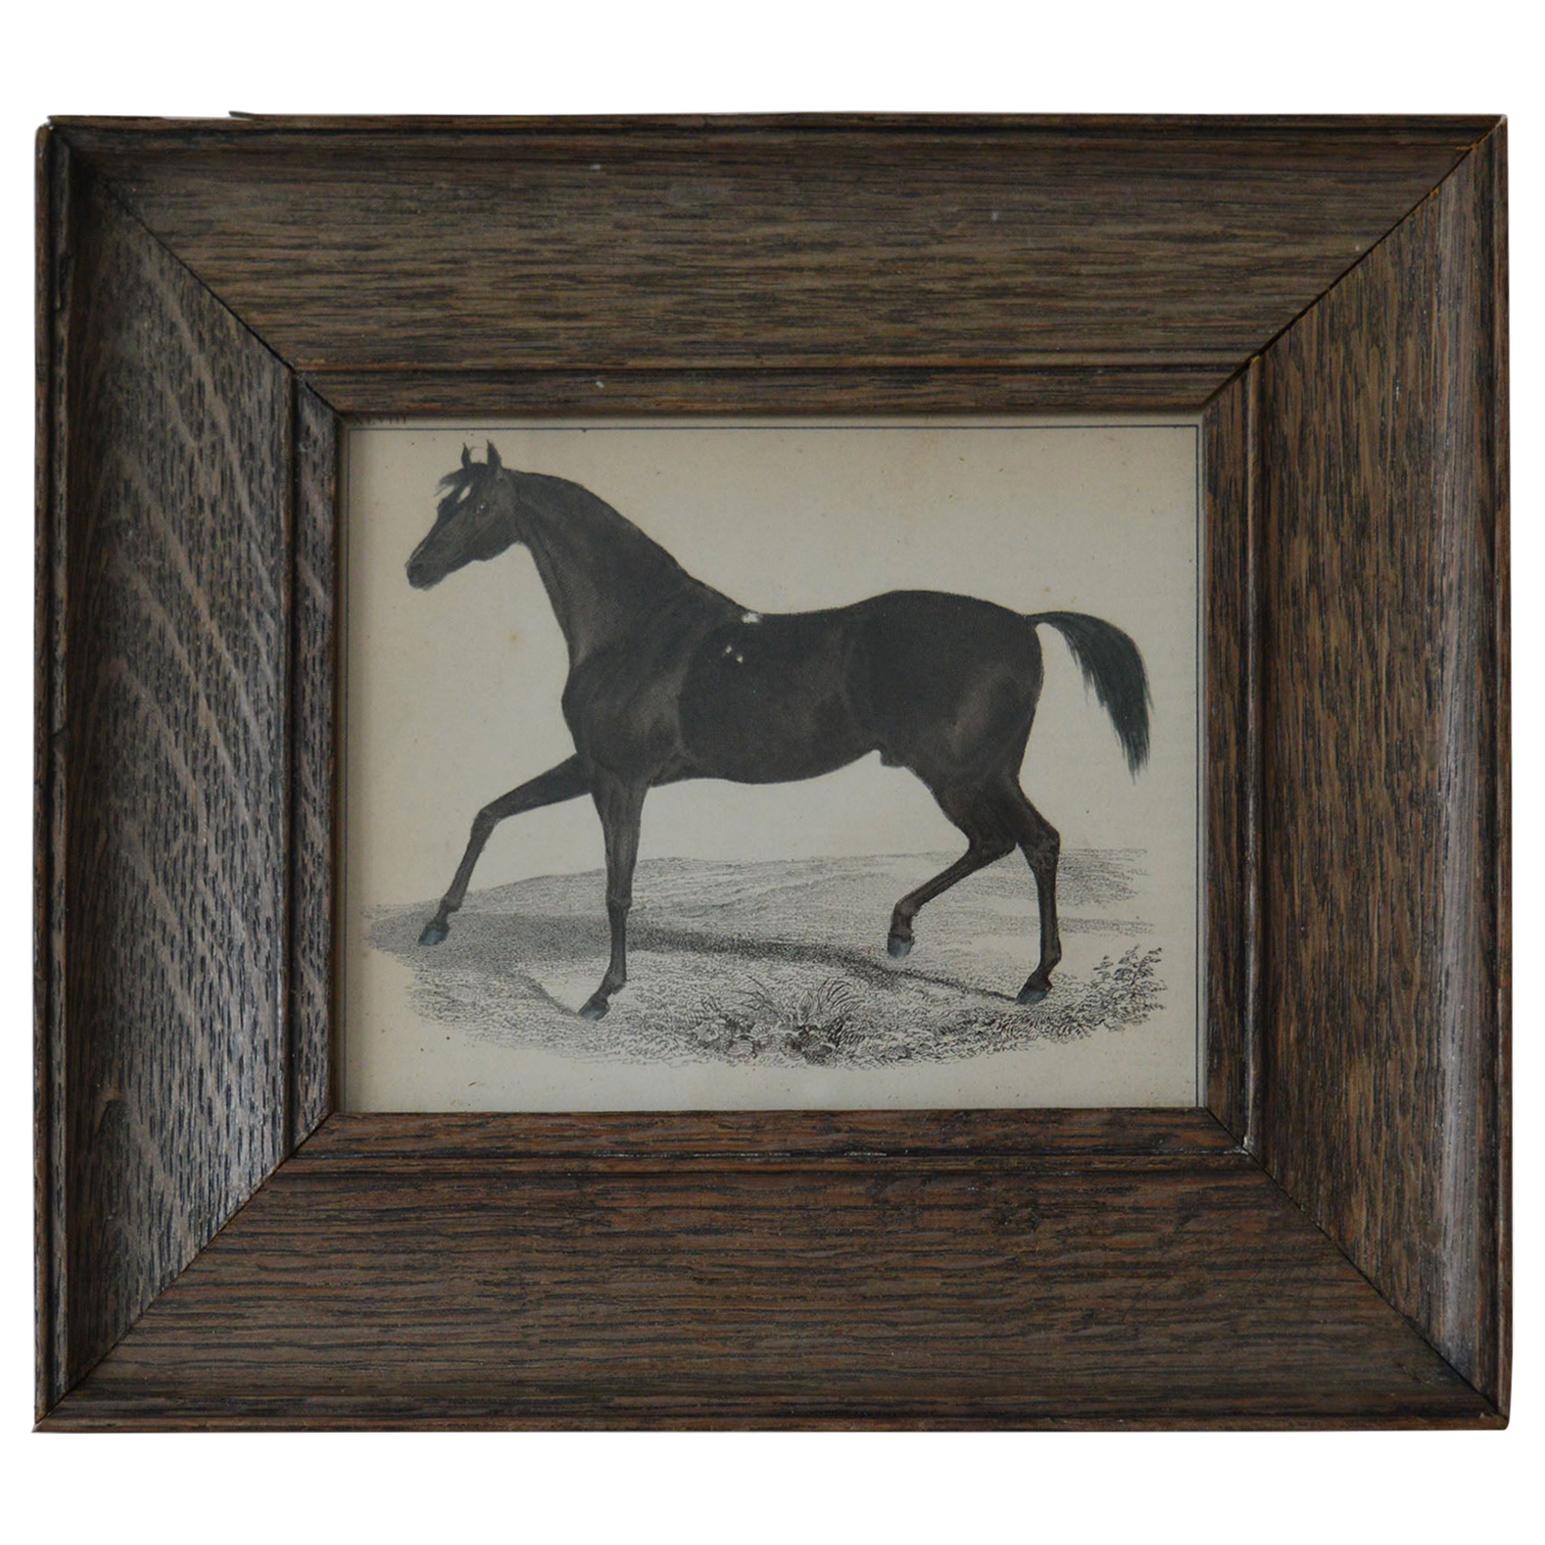 Original Antique Print of a Horse, 1847